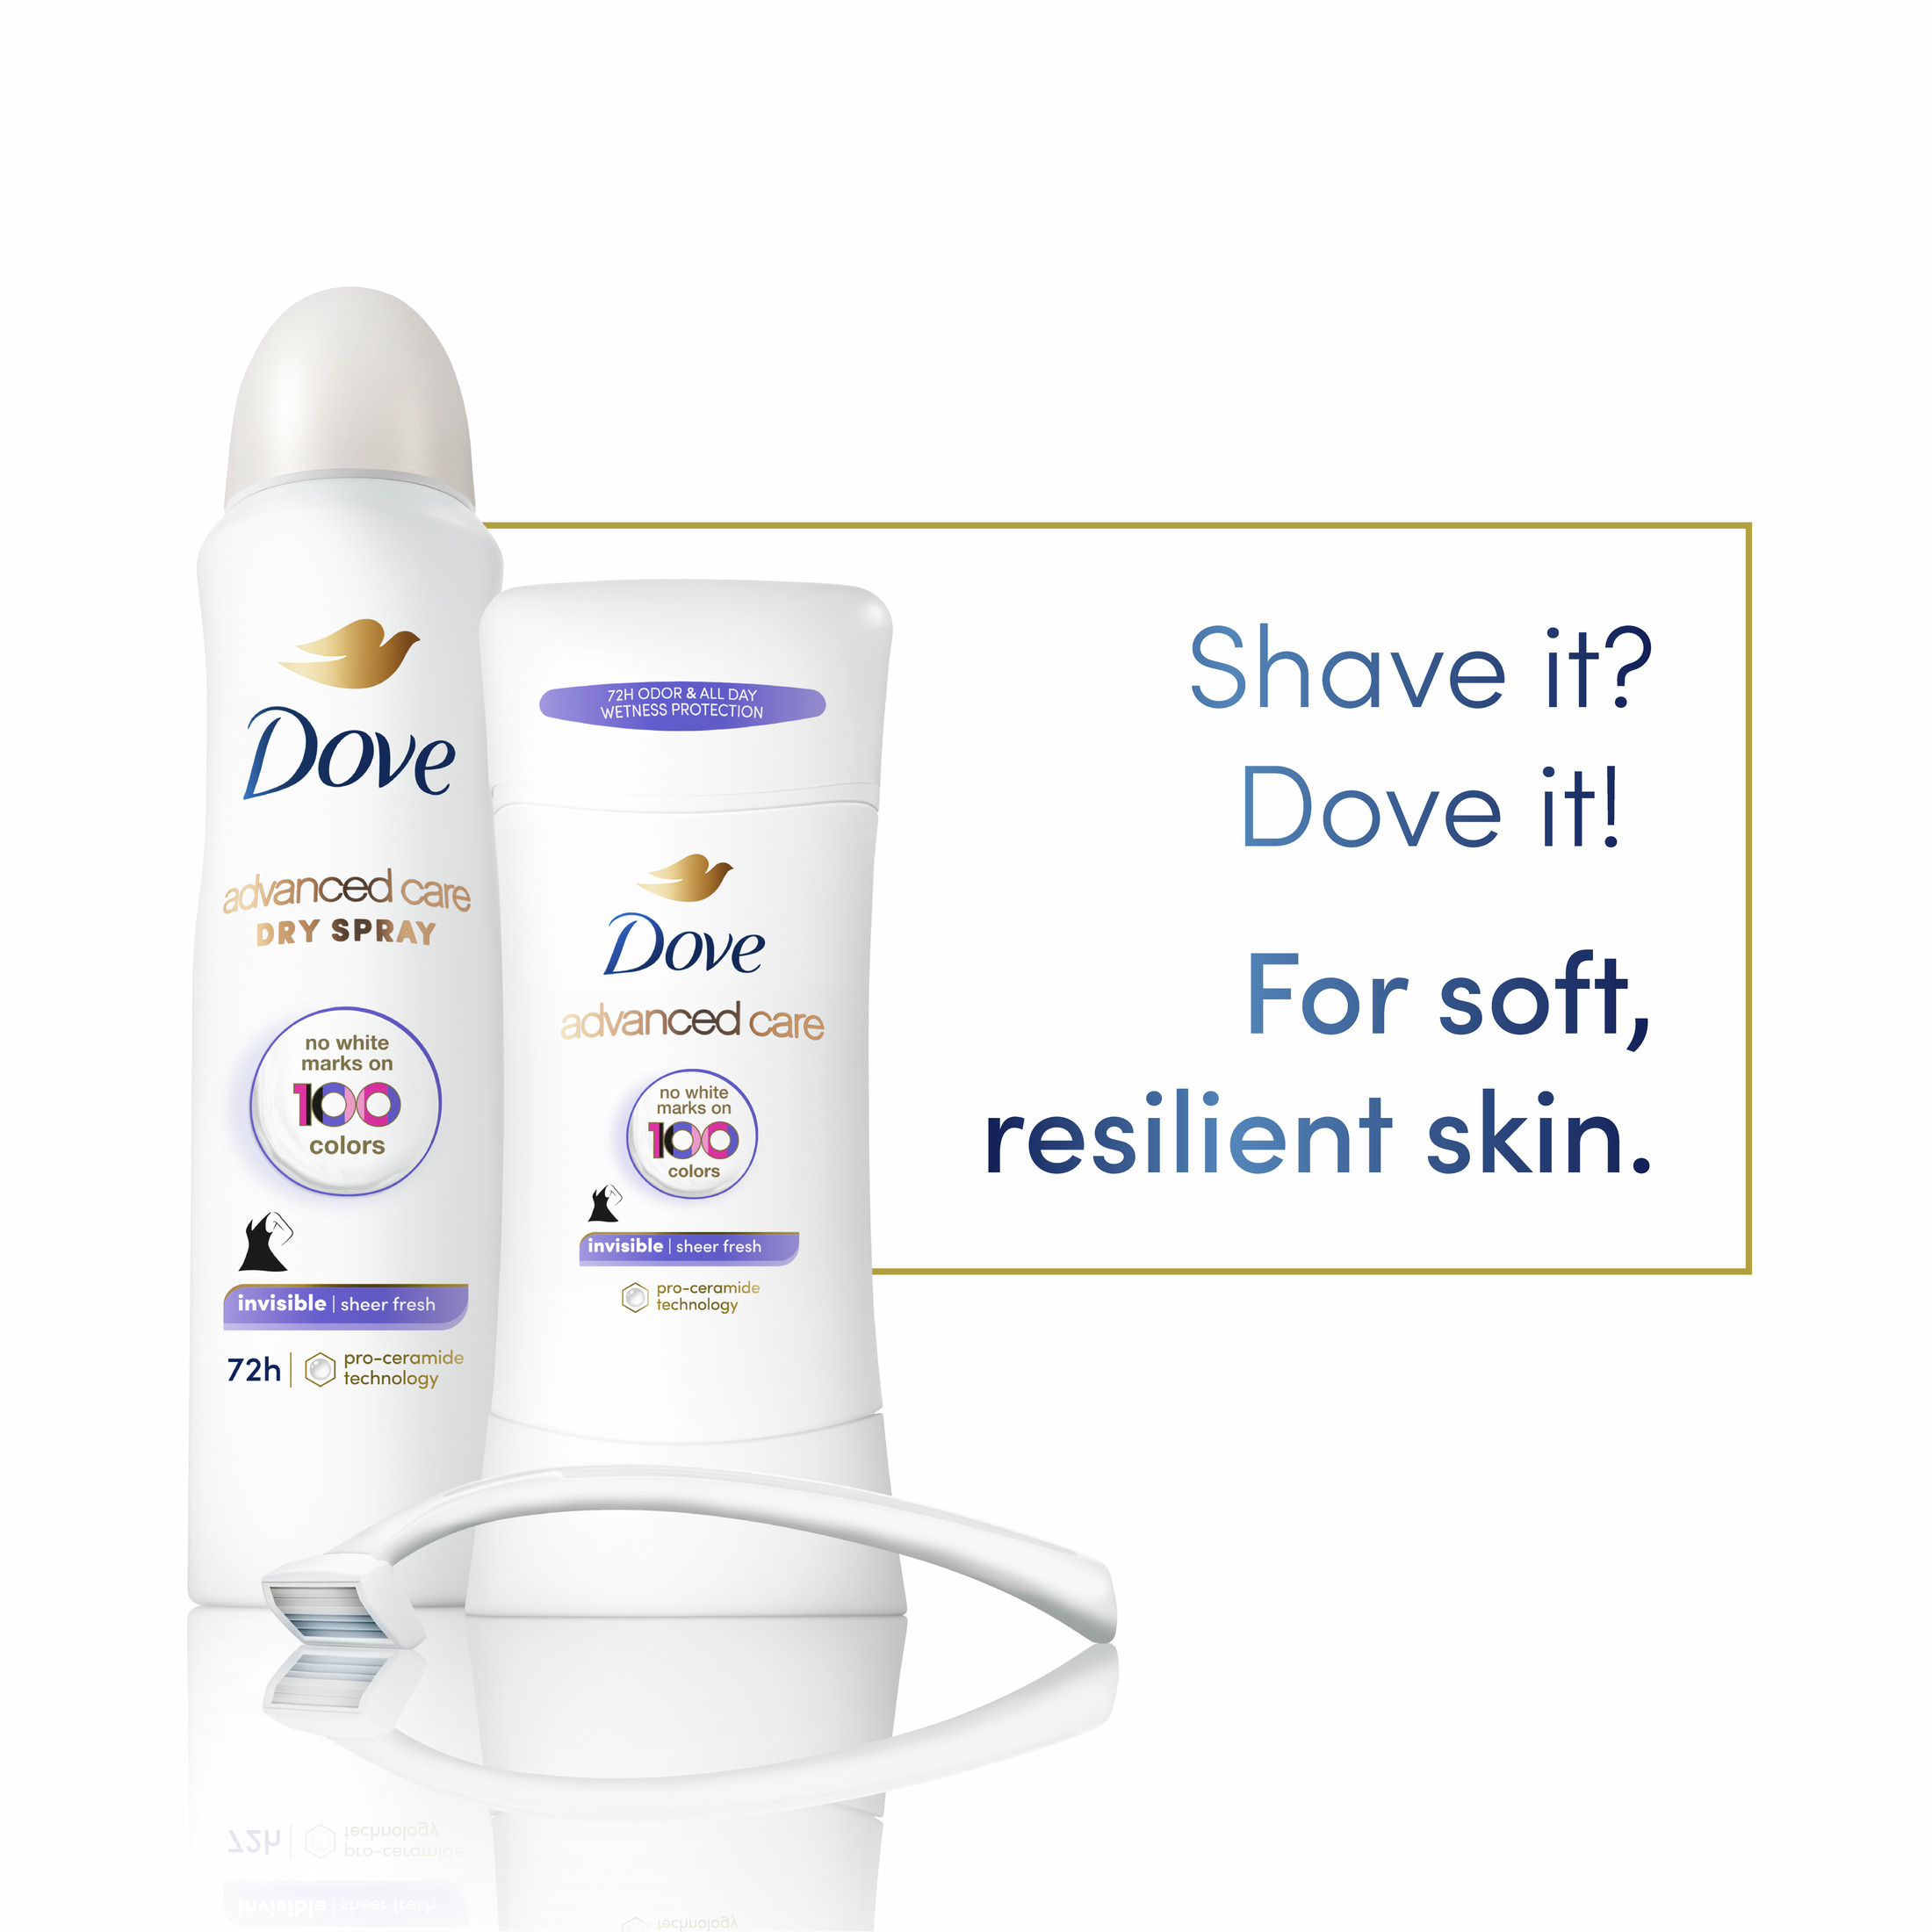 Dove Advanced Care Long Lasting Women's Antiperspirant Deodorant Stick Invisible Sheer Fresh, 2.6 oz - image 5 of 12